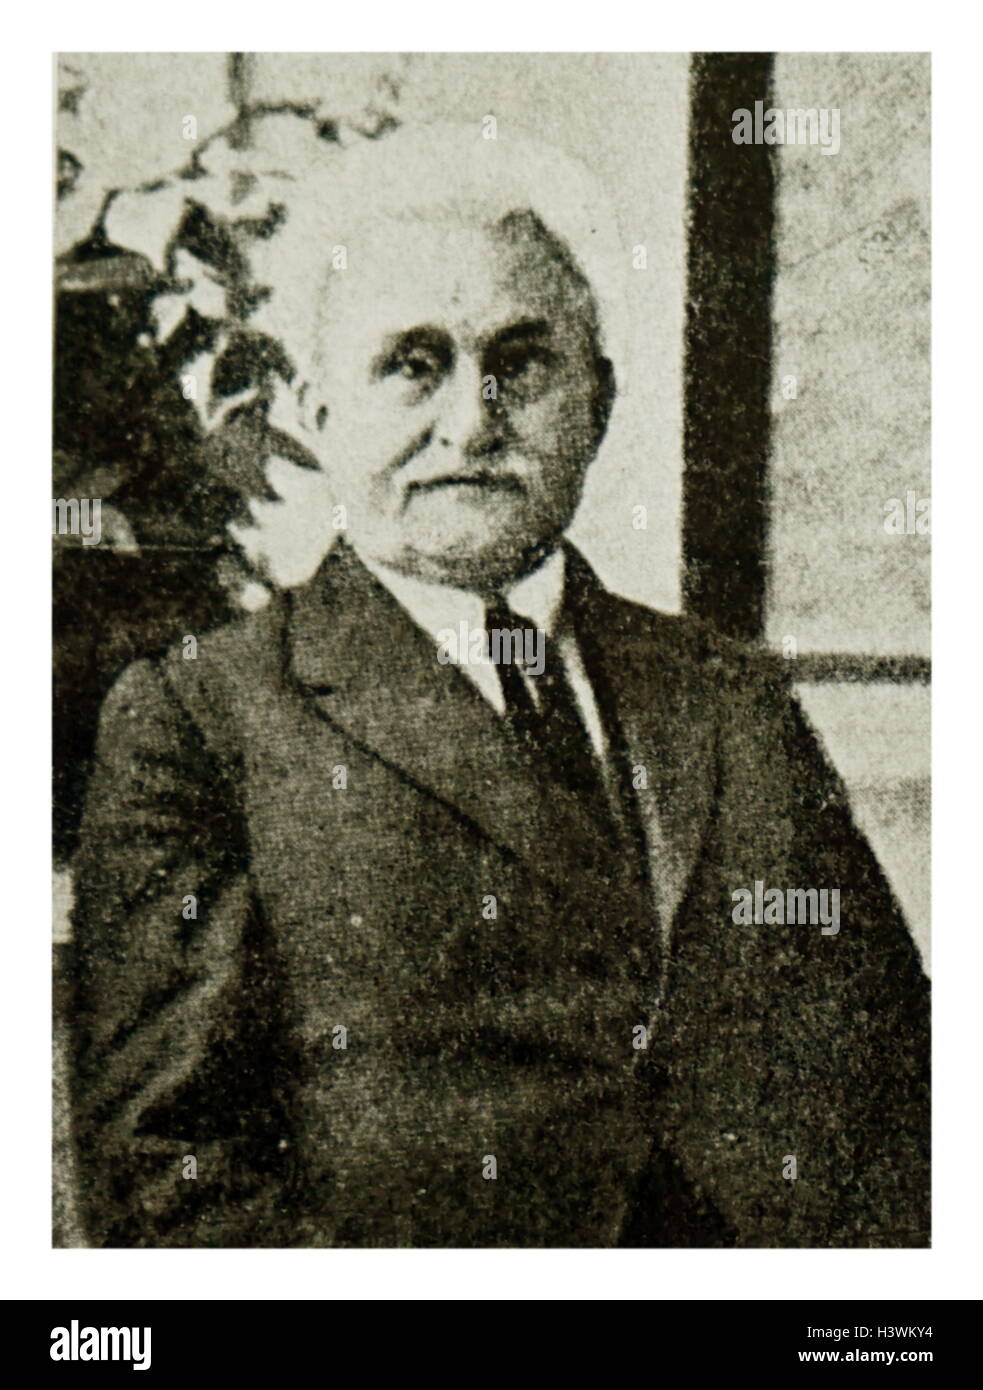 Photographic portrait of Leoš Janácek (1854-1928) a Czech composer, musical theorist, folklorist, publicist and teacher. Dated 20th Century Stock Photo